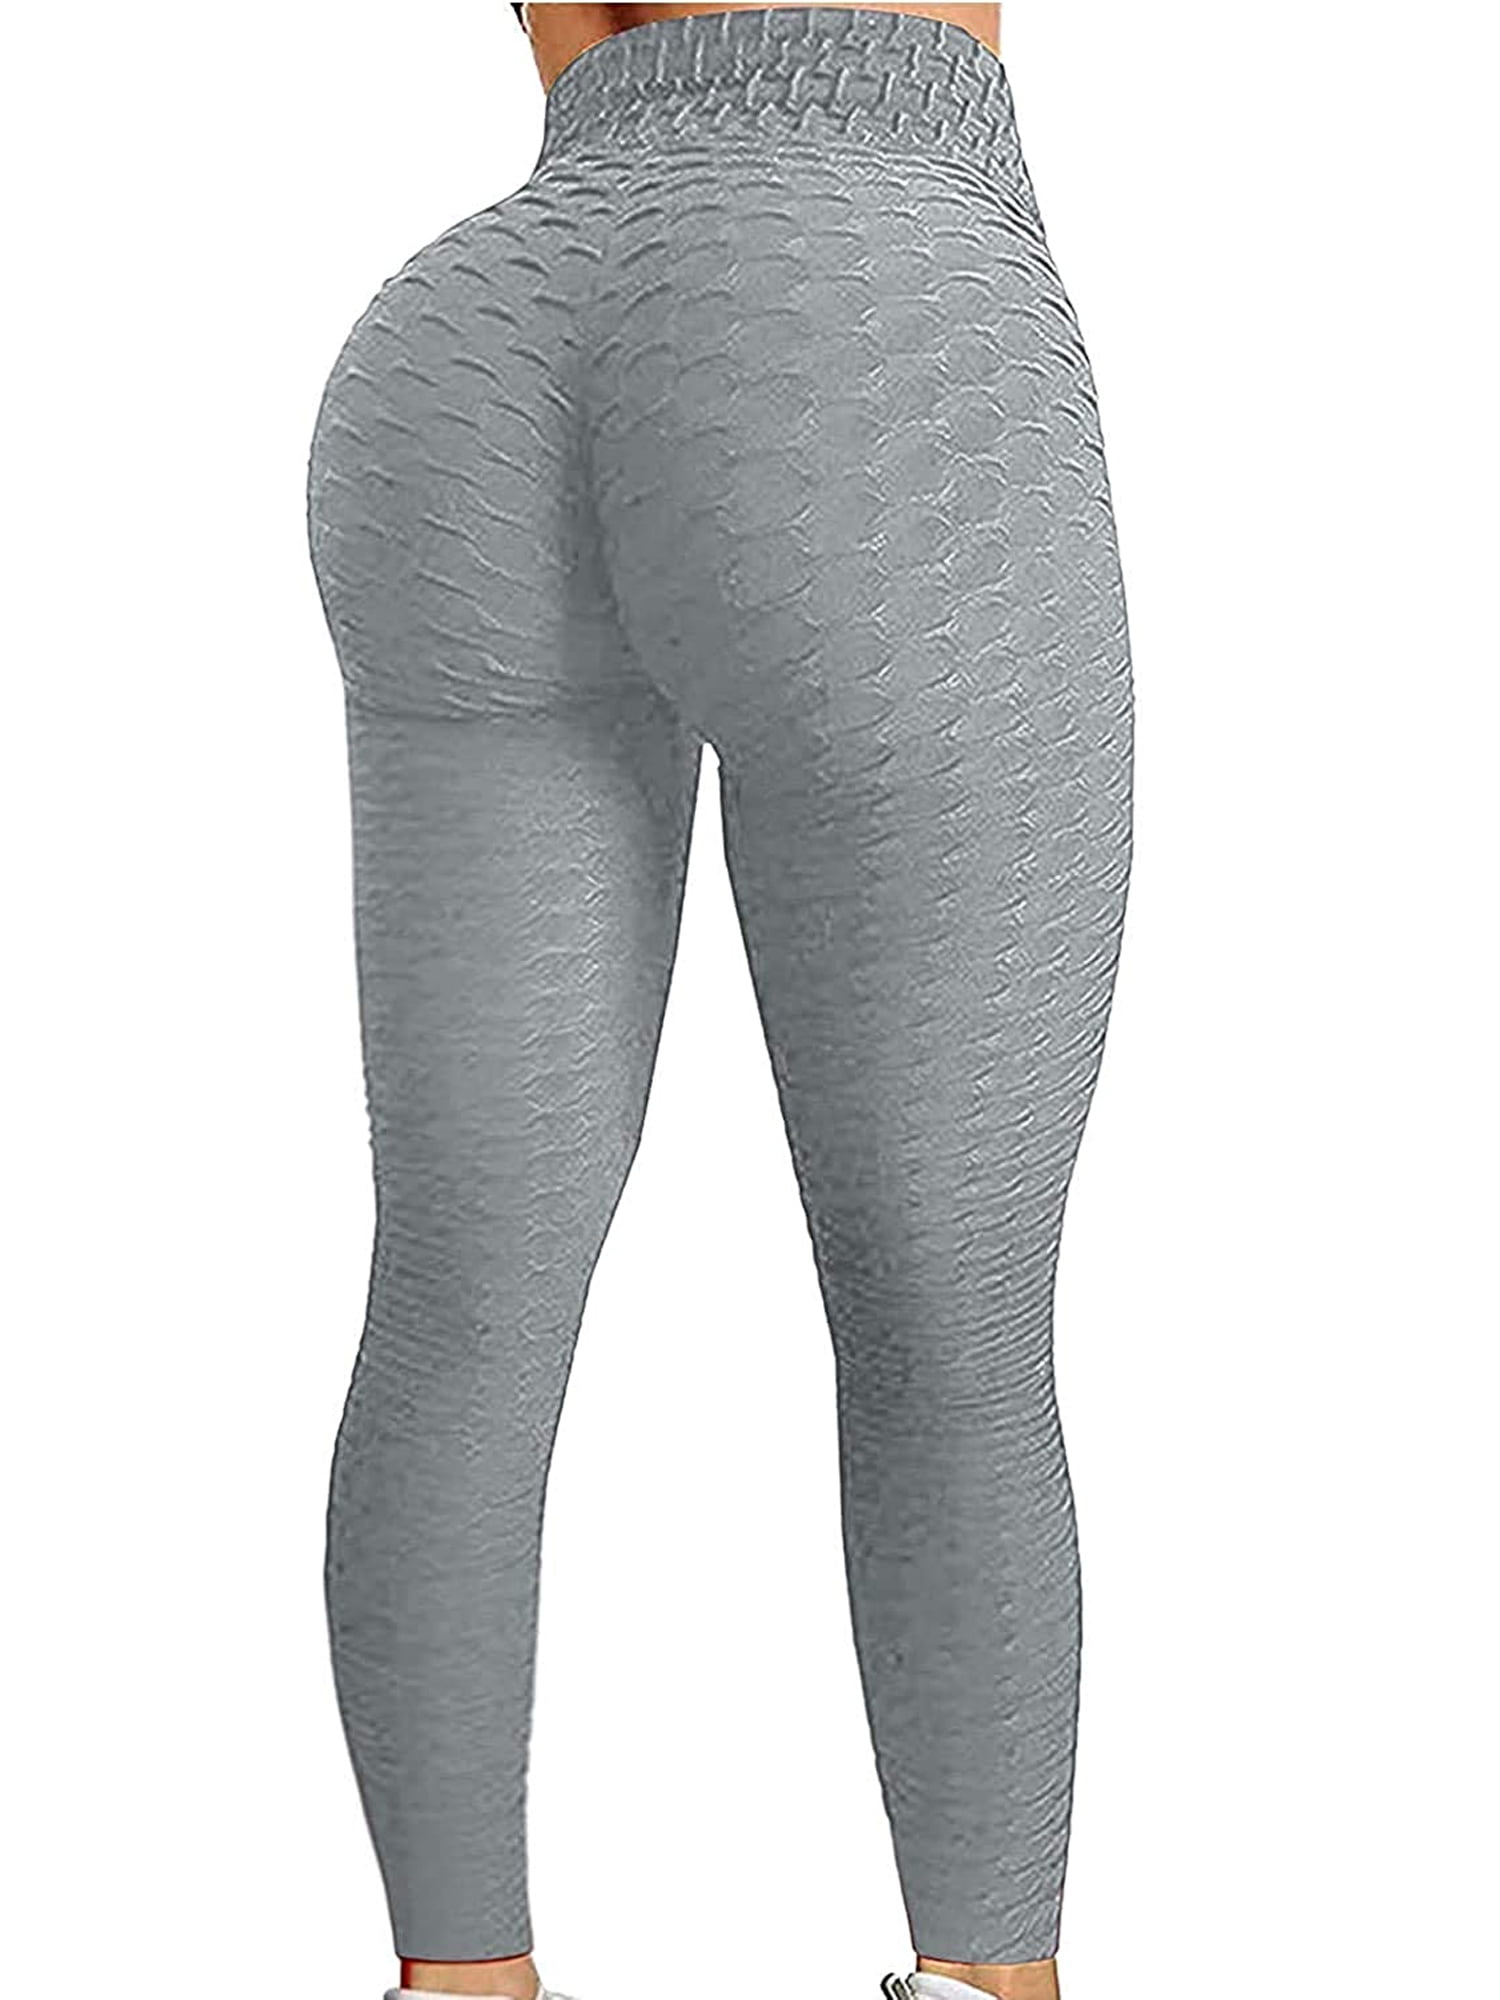 Women Yoga Gym Anti-Cellulite Leggings Fitness Solid Butt Lift Elastic Pants FNK 